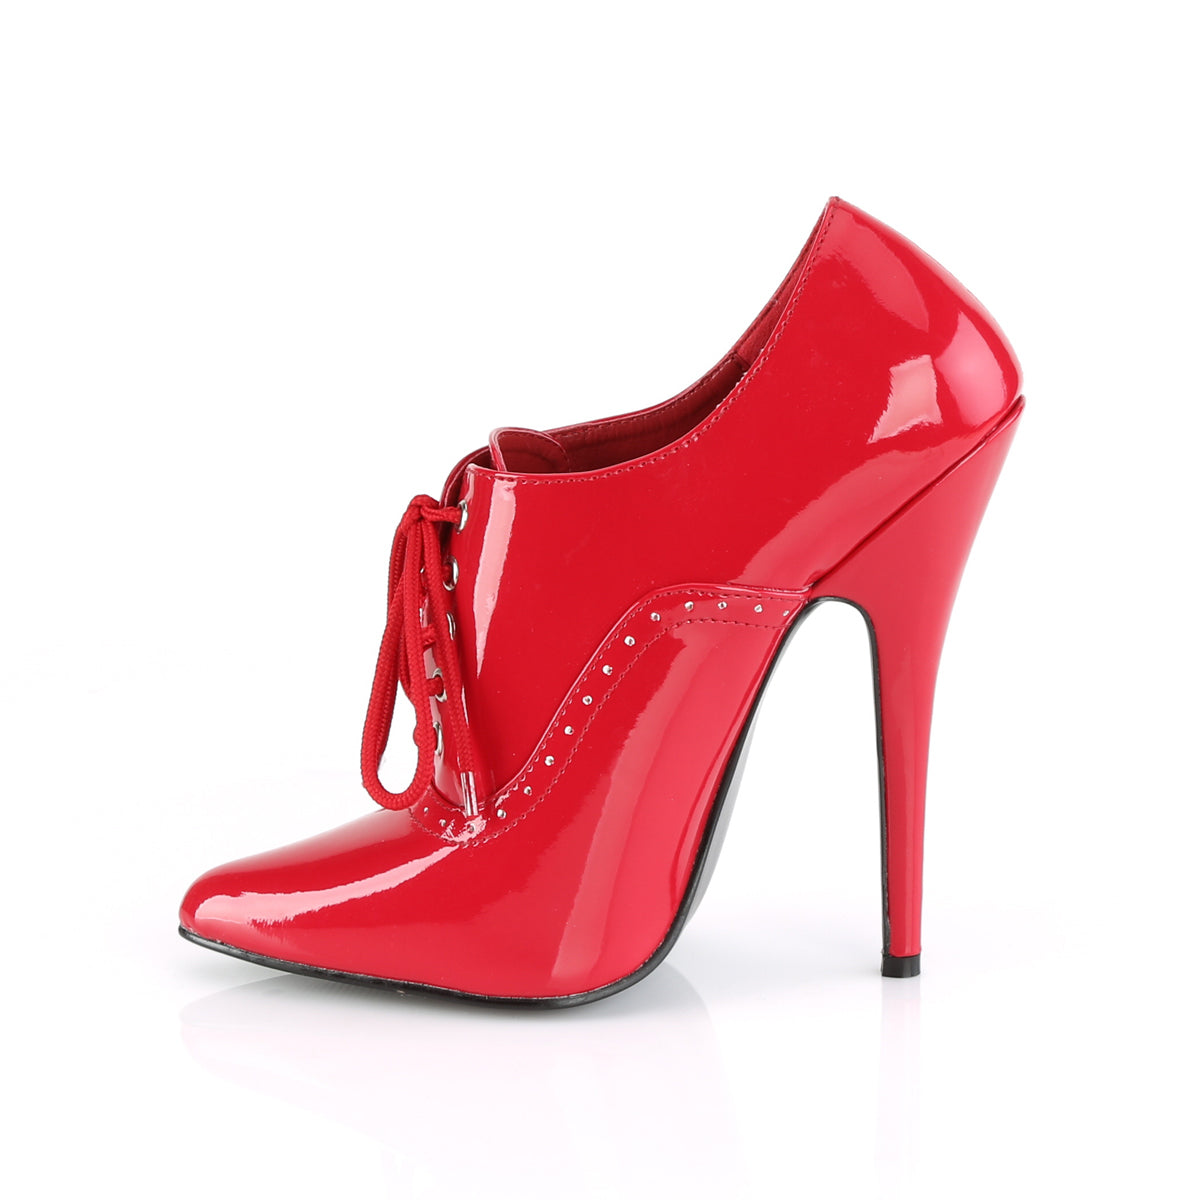 DOMINA-460 Devious Heels Red Patent Single Soles [Fetish Heels]